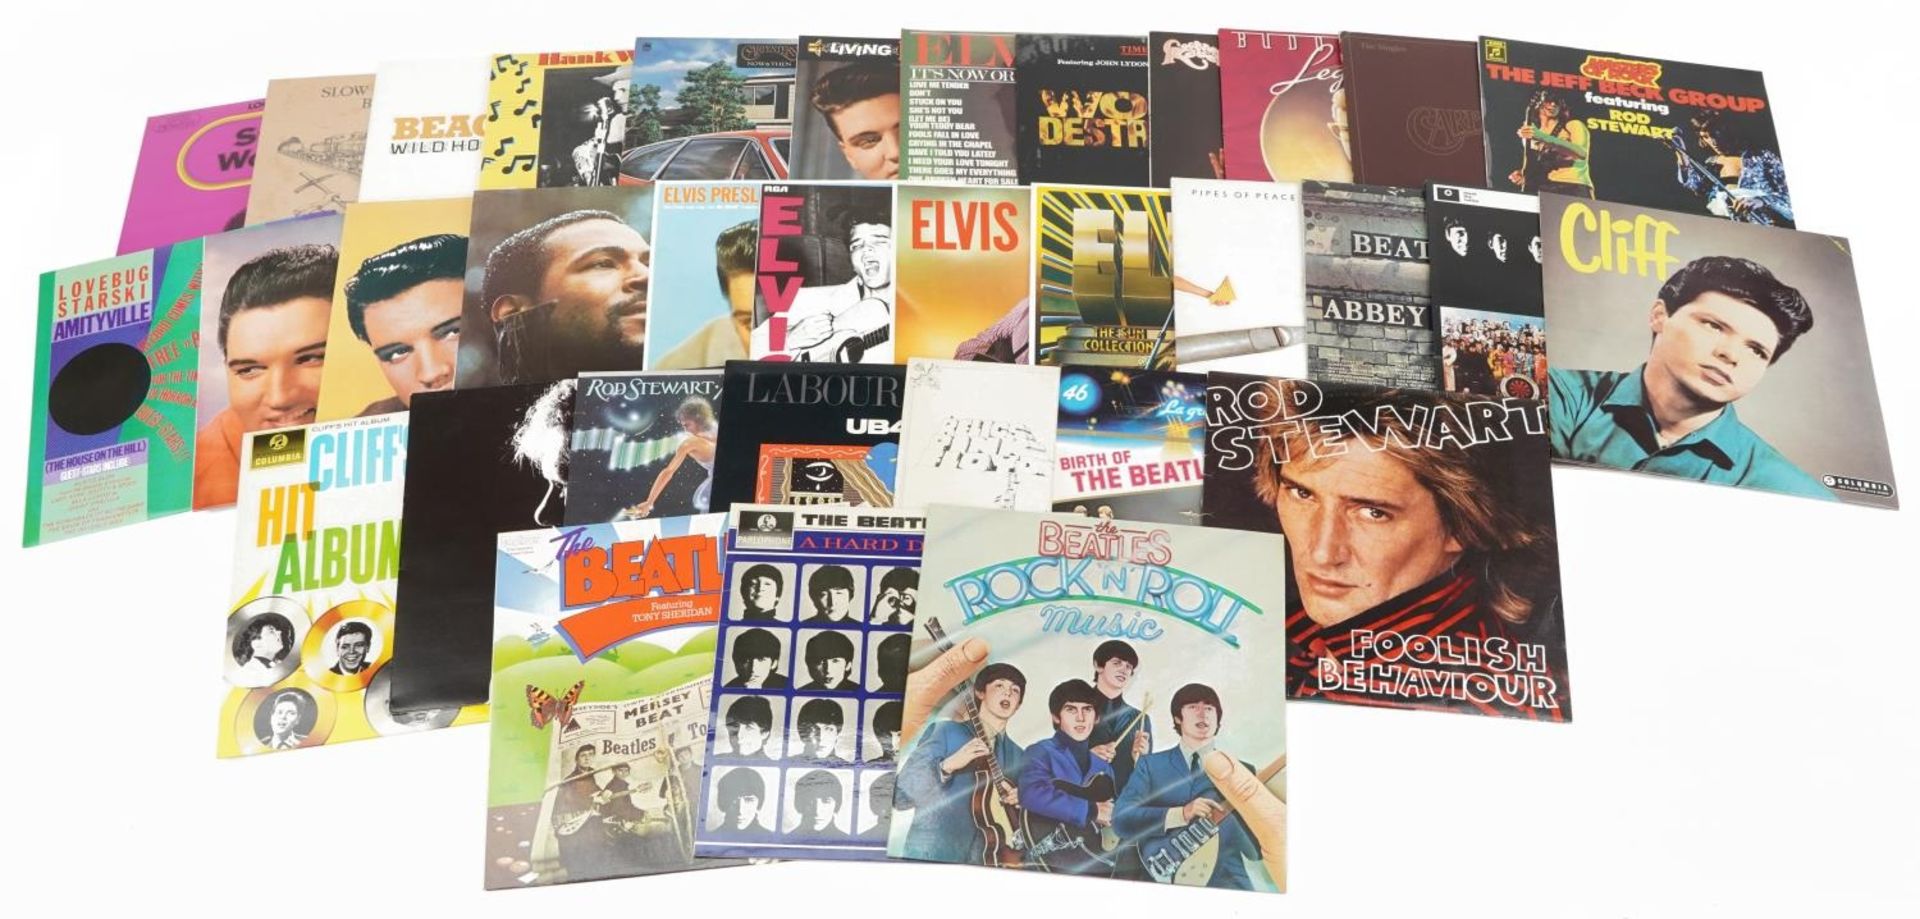 Vinyl LP records including UB40, The Beatles, Cliff Richard, Rod Stewart, Elvis Presley, The